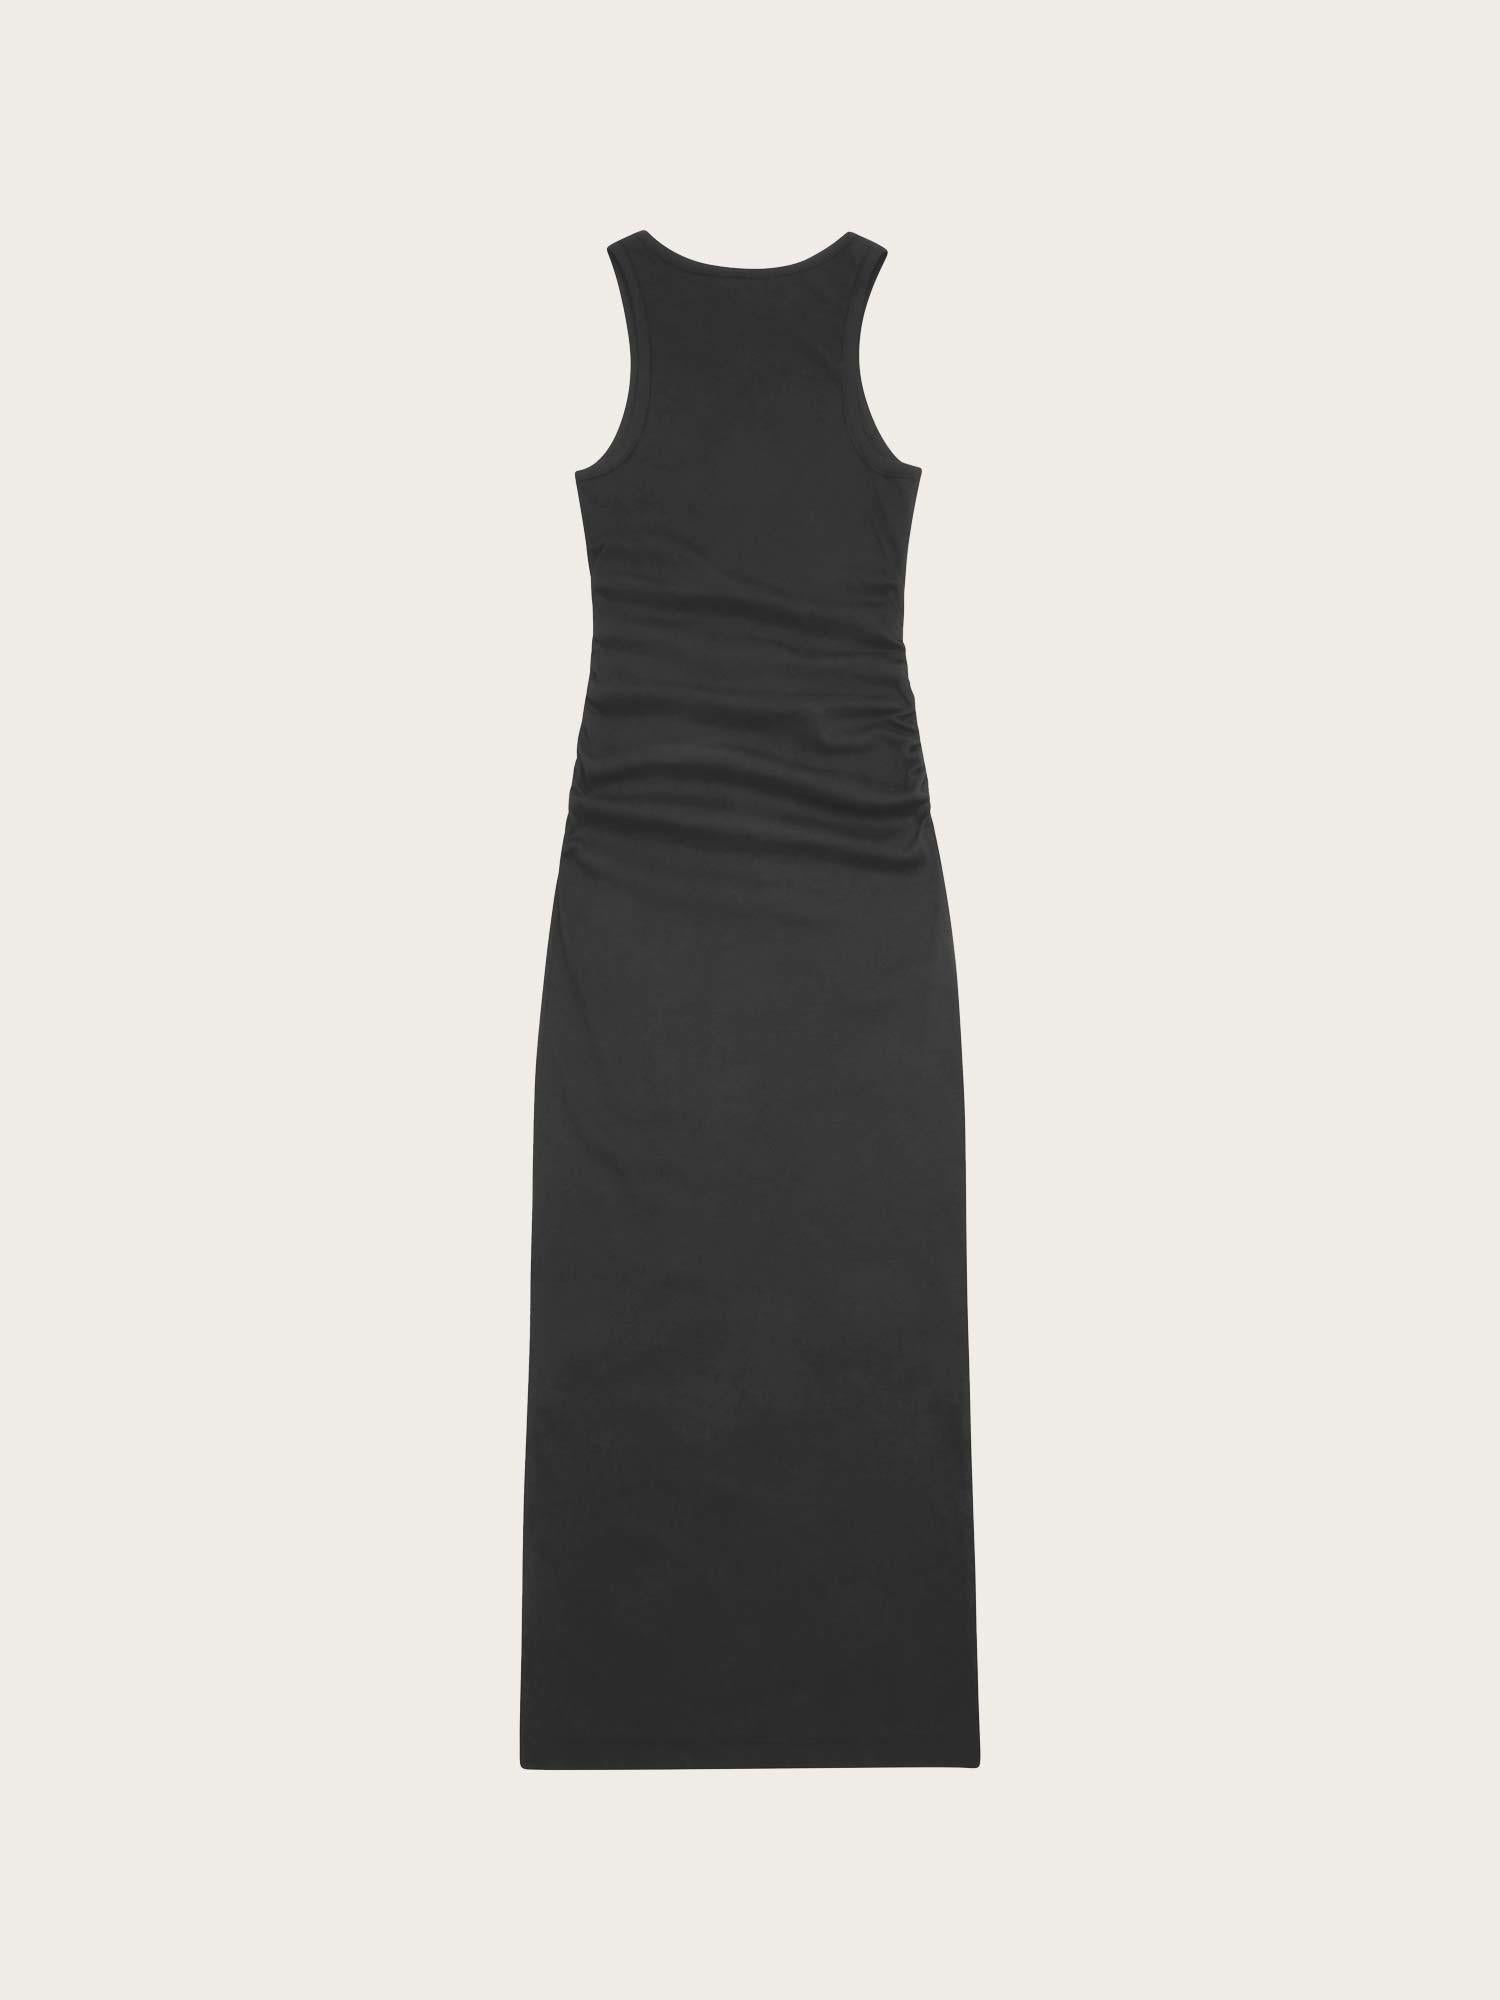 T3935 Soft Cotton Rib Tank Top Long Dress - Black